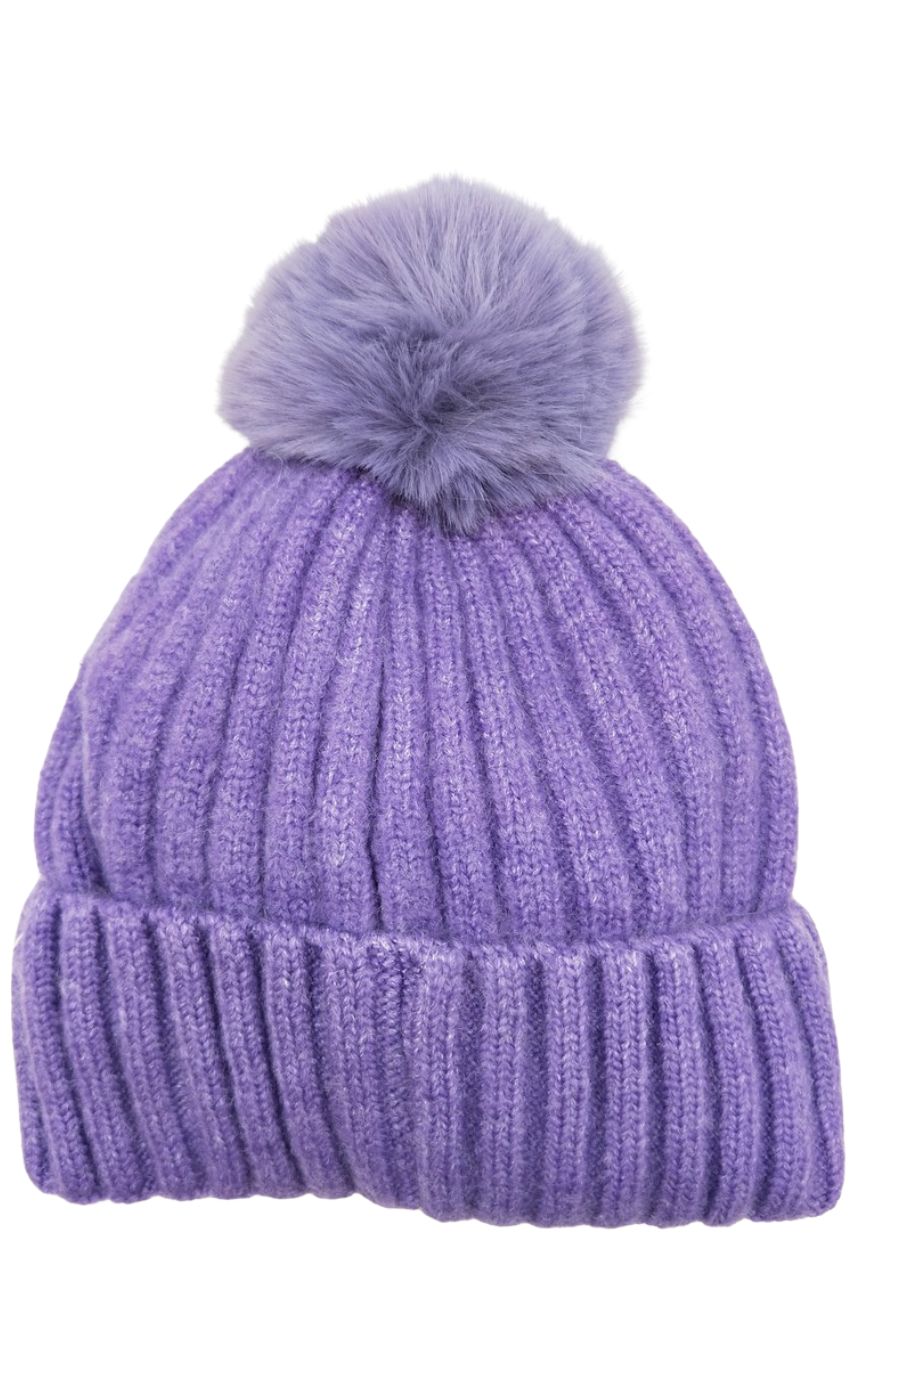 PomPom Hat in Purple